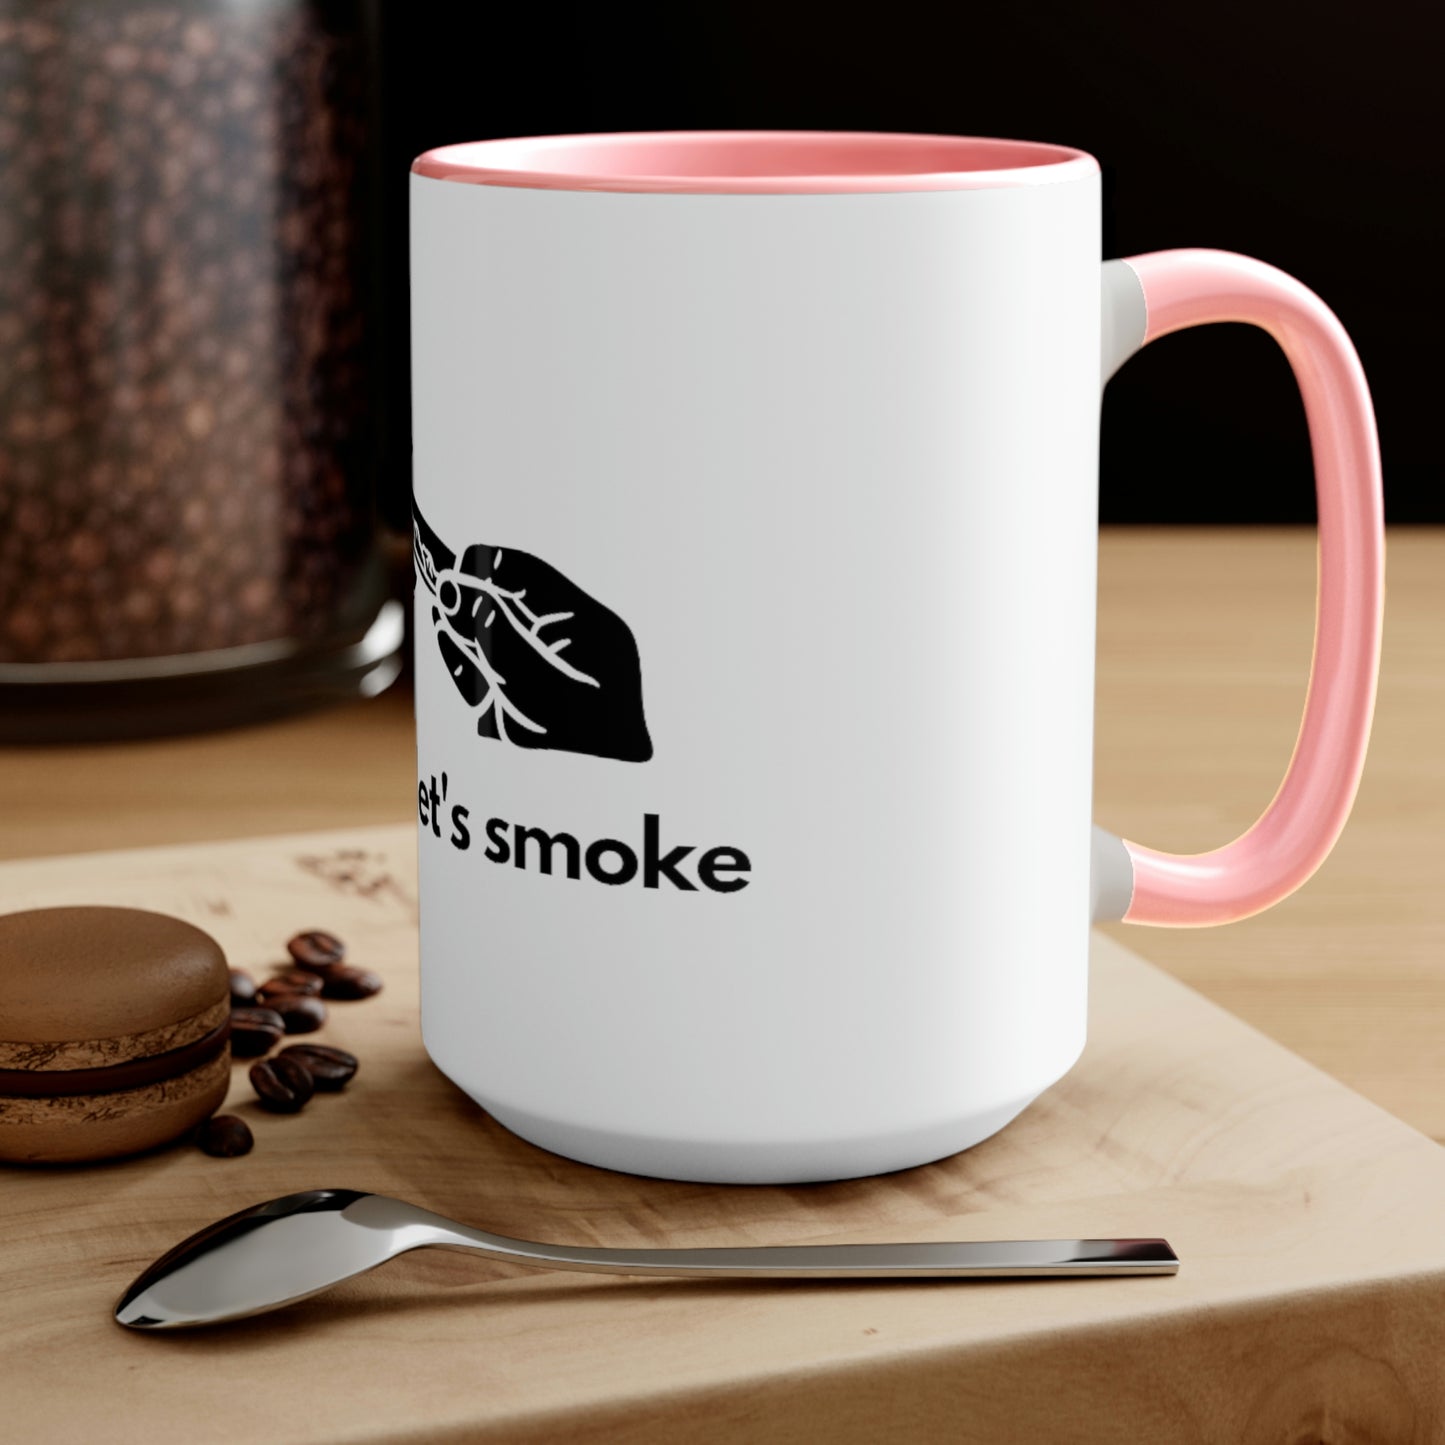 a But First, Let's Smoke coffee mug.